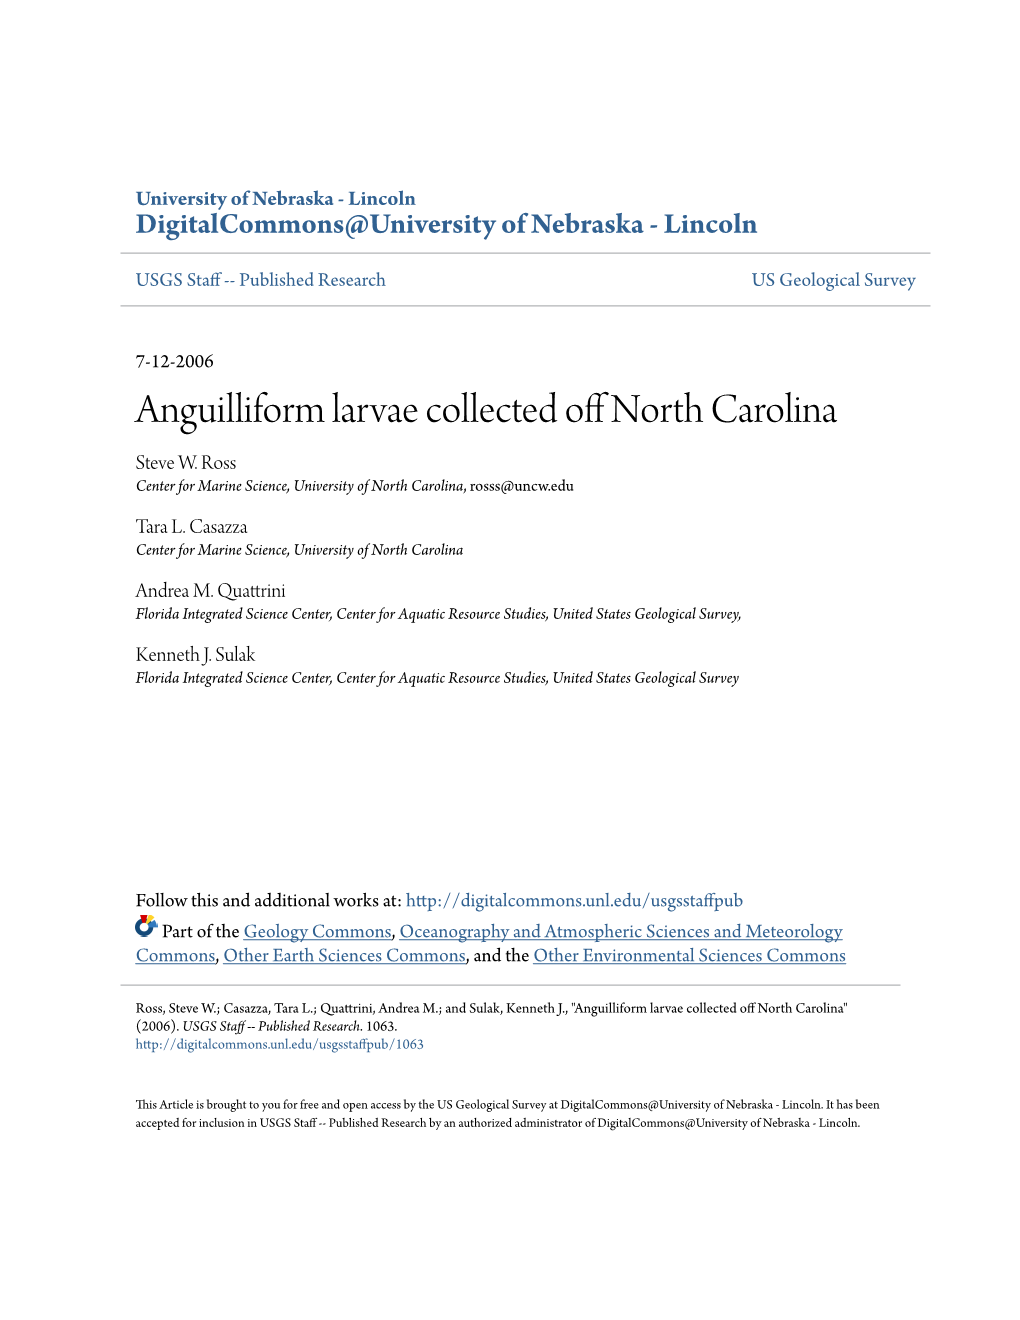 Anguilliform Larvae Collected Off North Carolina